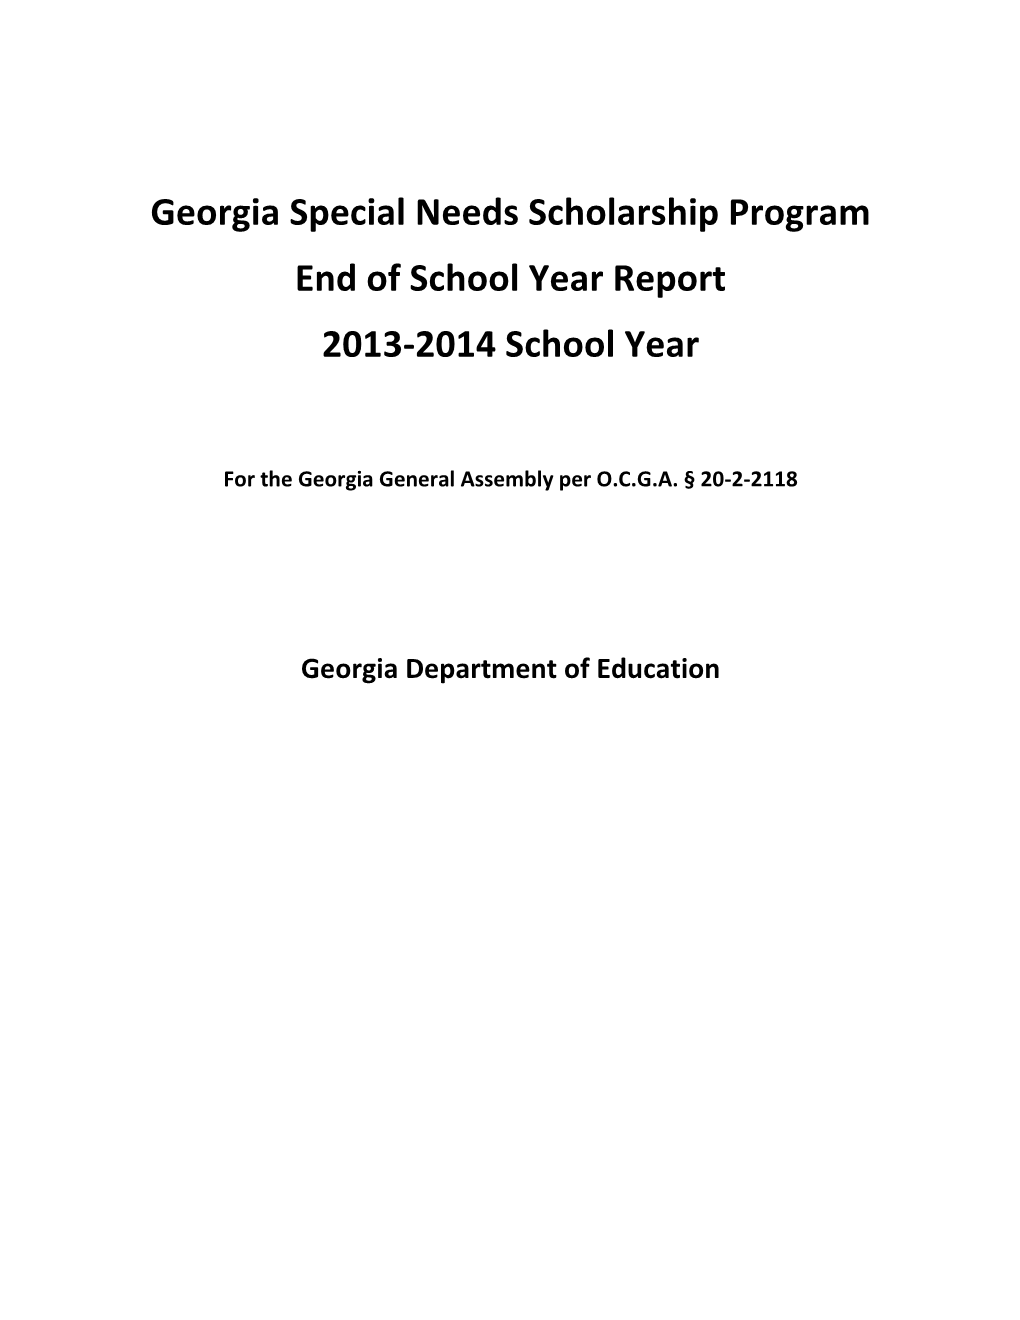 Georgia Special Needs Scholarship Program End of School Year Report 2013-2014 School Year